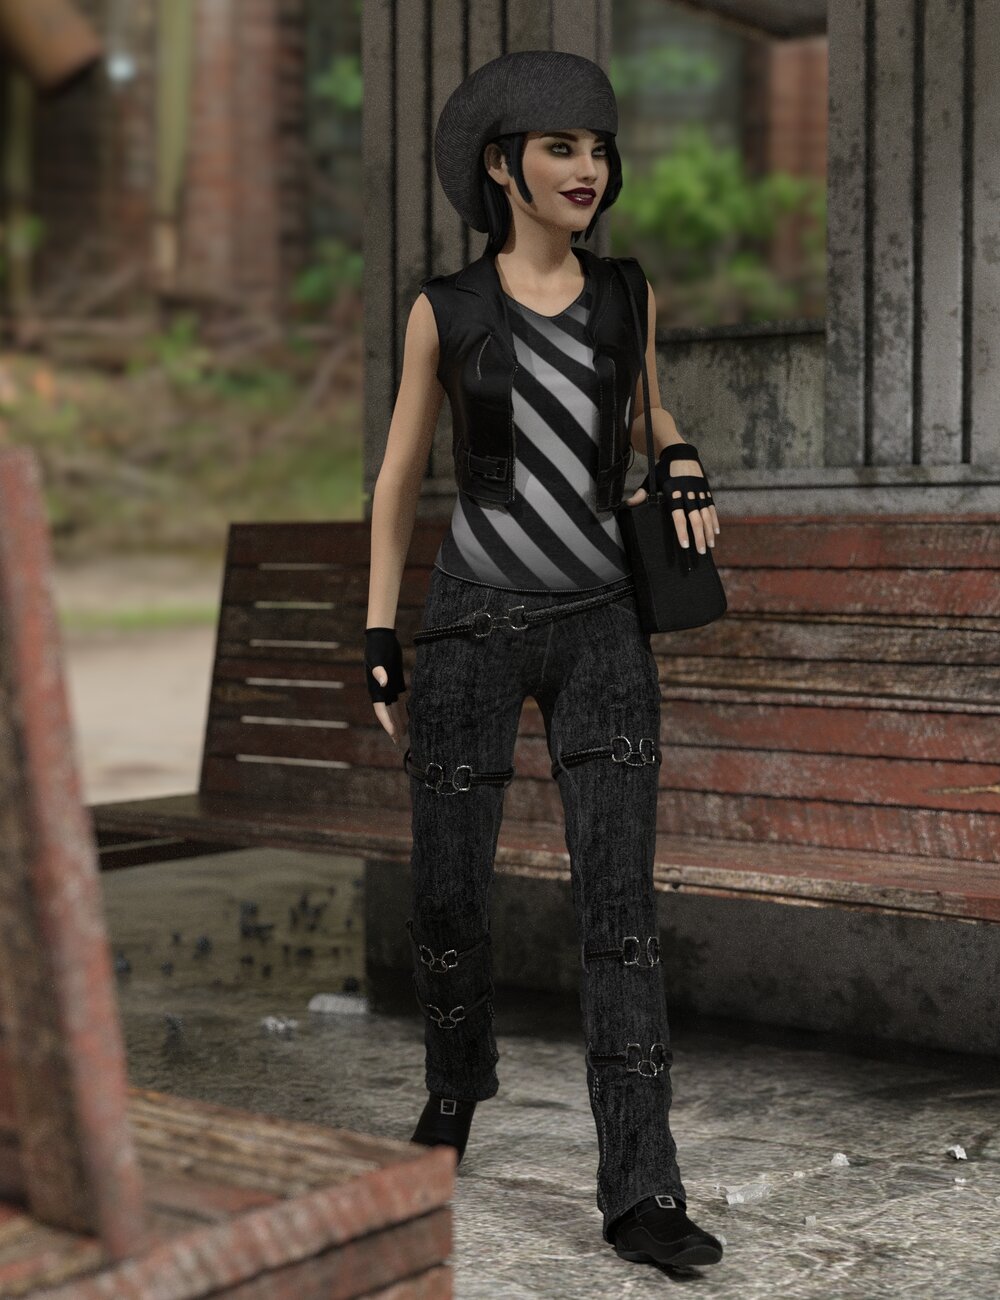 dforce Scene Kid Outfit for Genesis 8 Female by: Sixus1 Media, 3D Models by Daz 3D